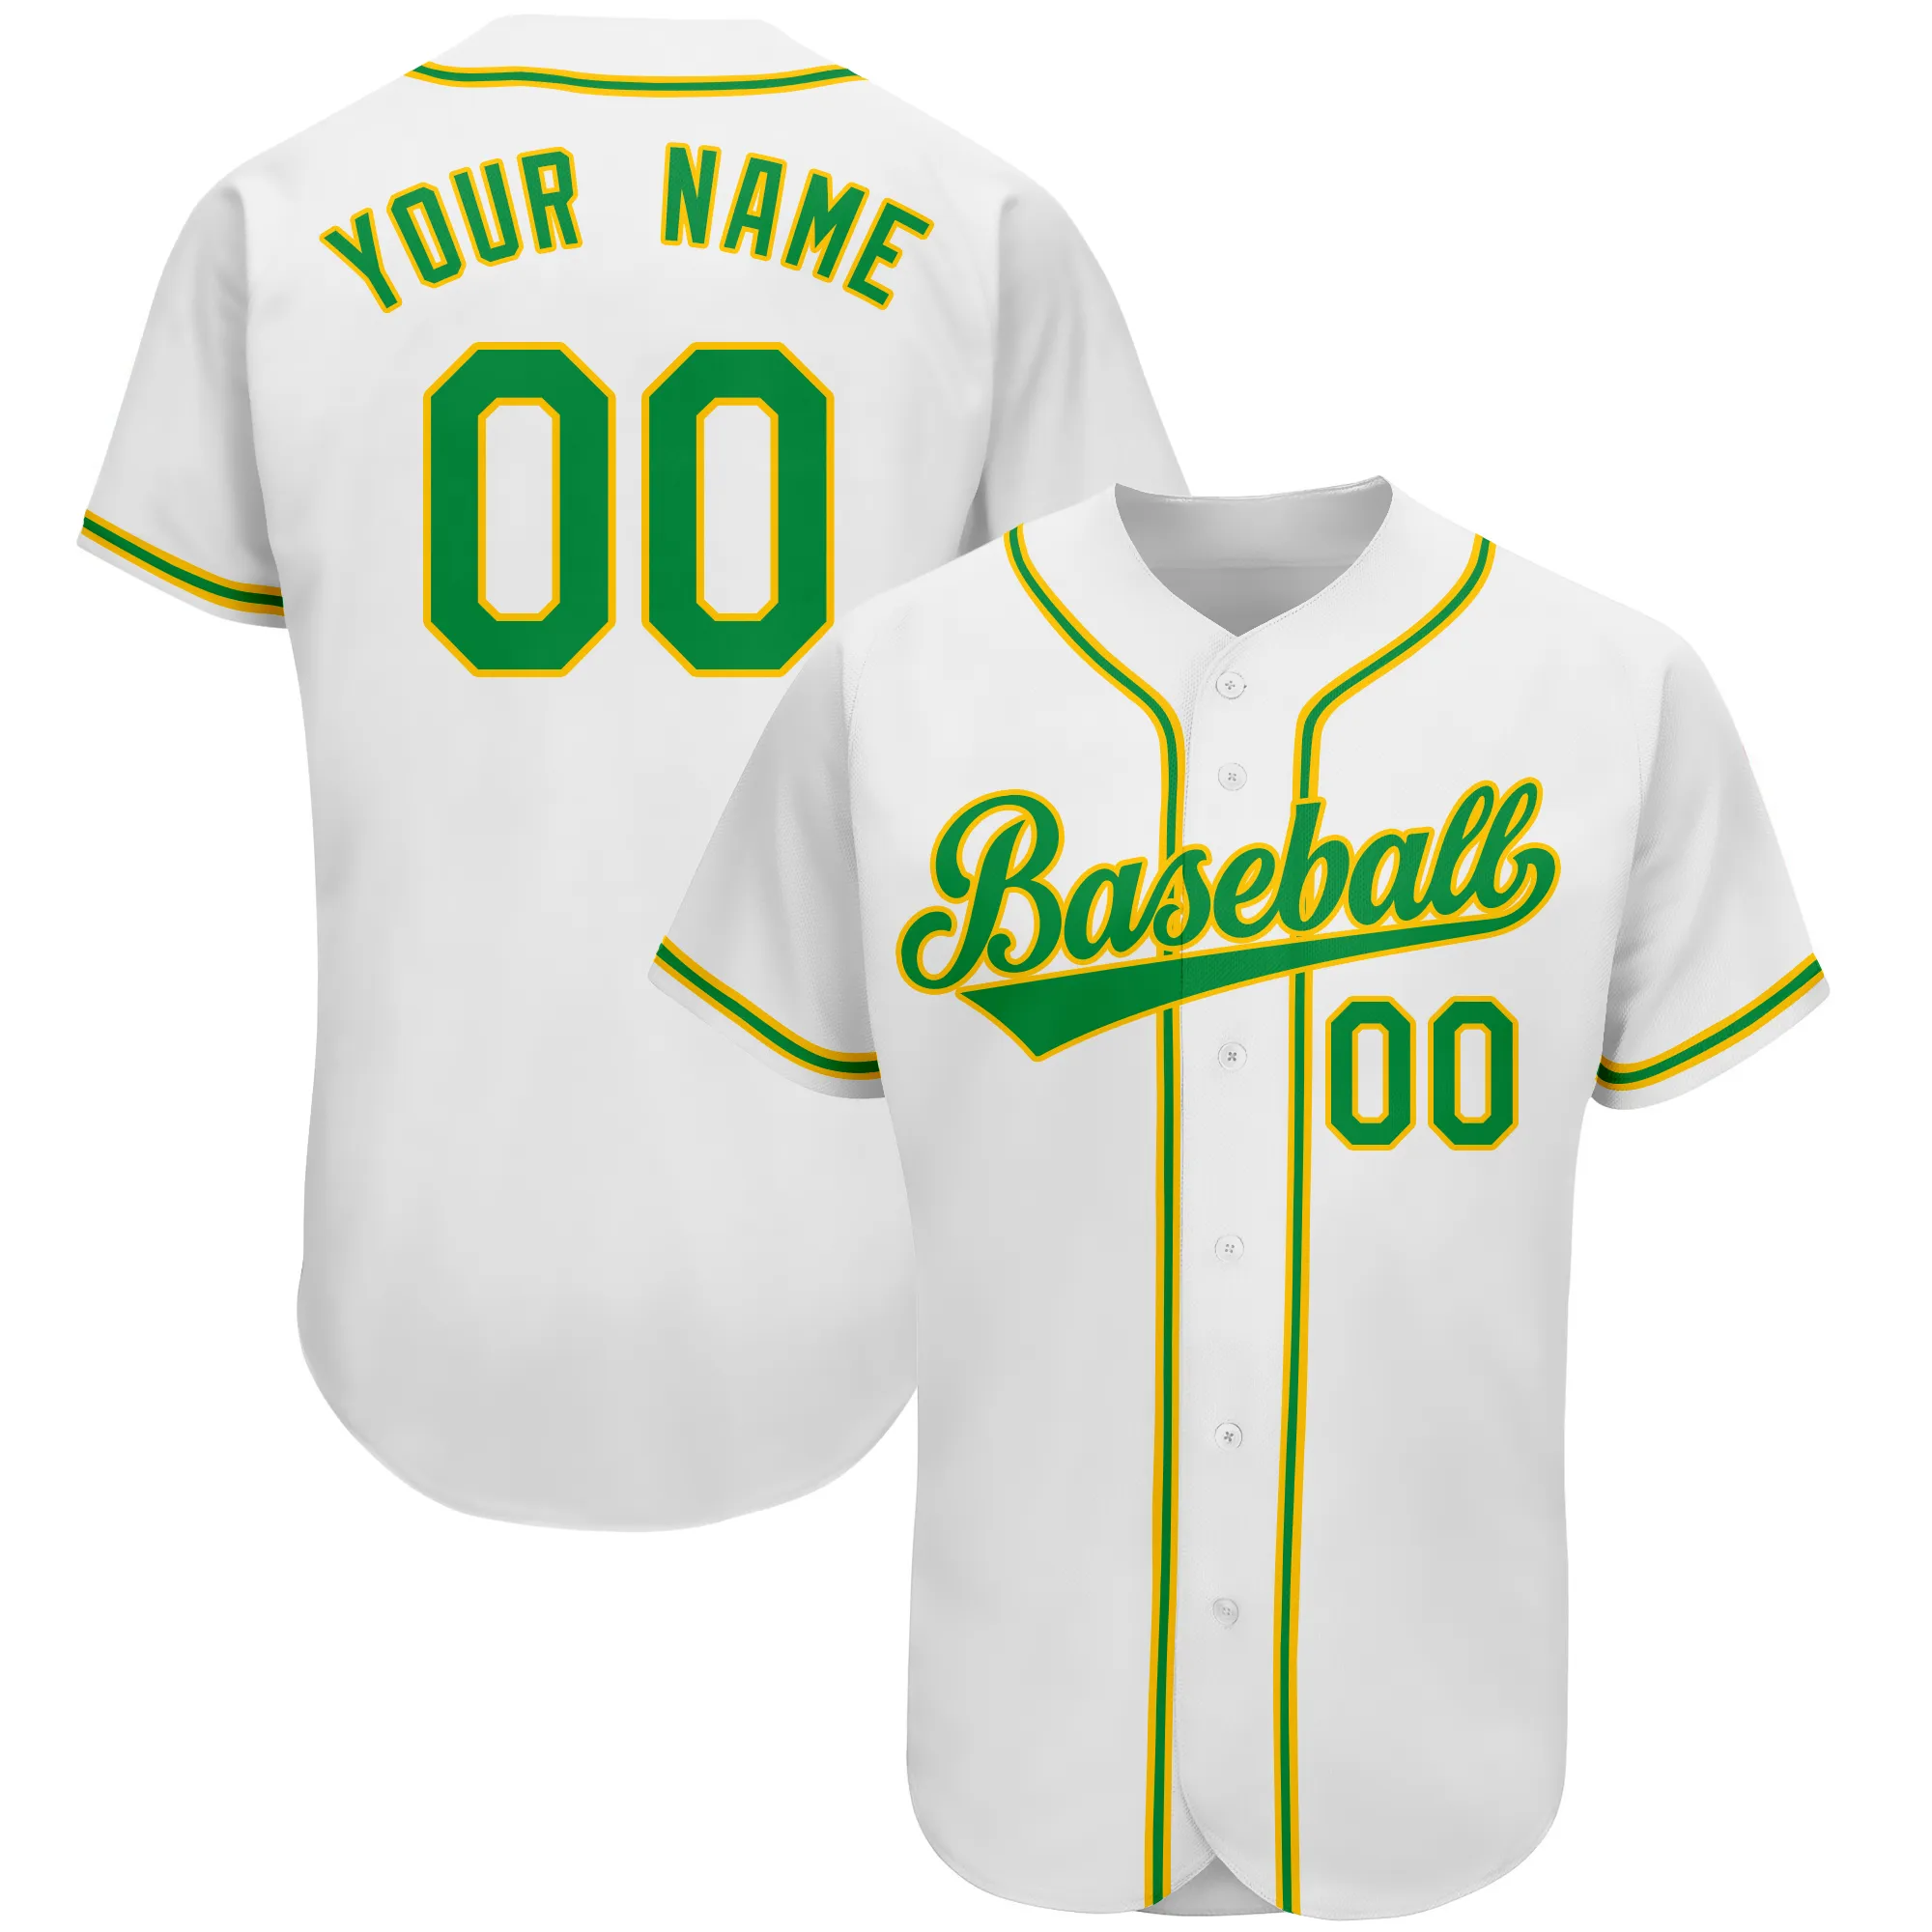 New Style Custom Baseball Jersey Team Training Uniform Printing Add Own Name Number Softball Sports White Green Men Ladies/Kids